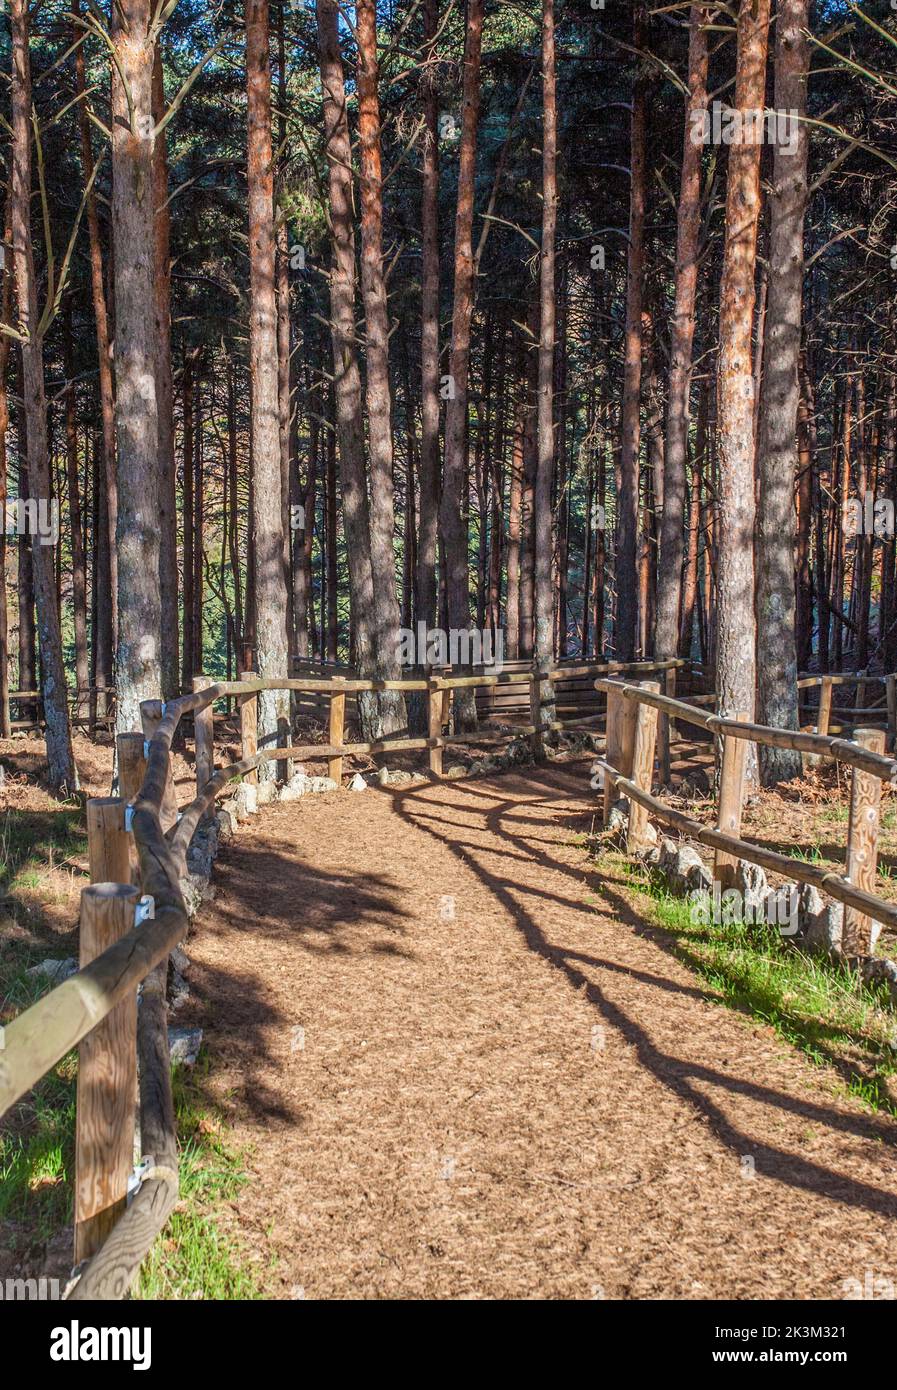 La Garganta forest Wooden Handrail. Magic place in the heart of Ambroz Valley, Banos de Montemayor, Caceres, Extremadura, Spain Stock Photo